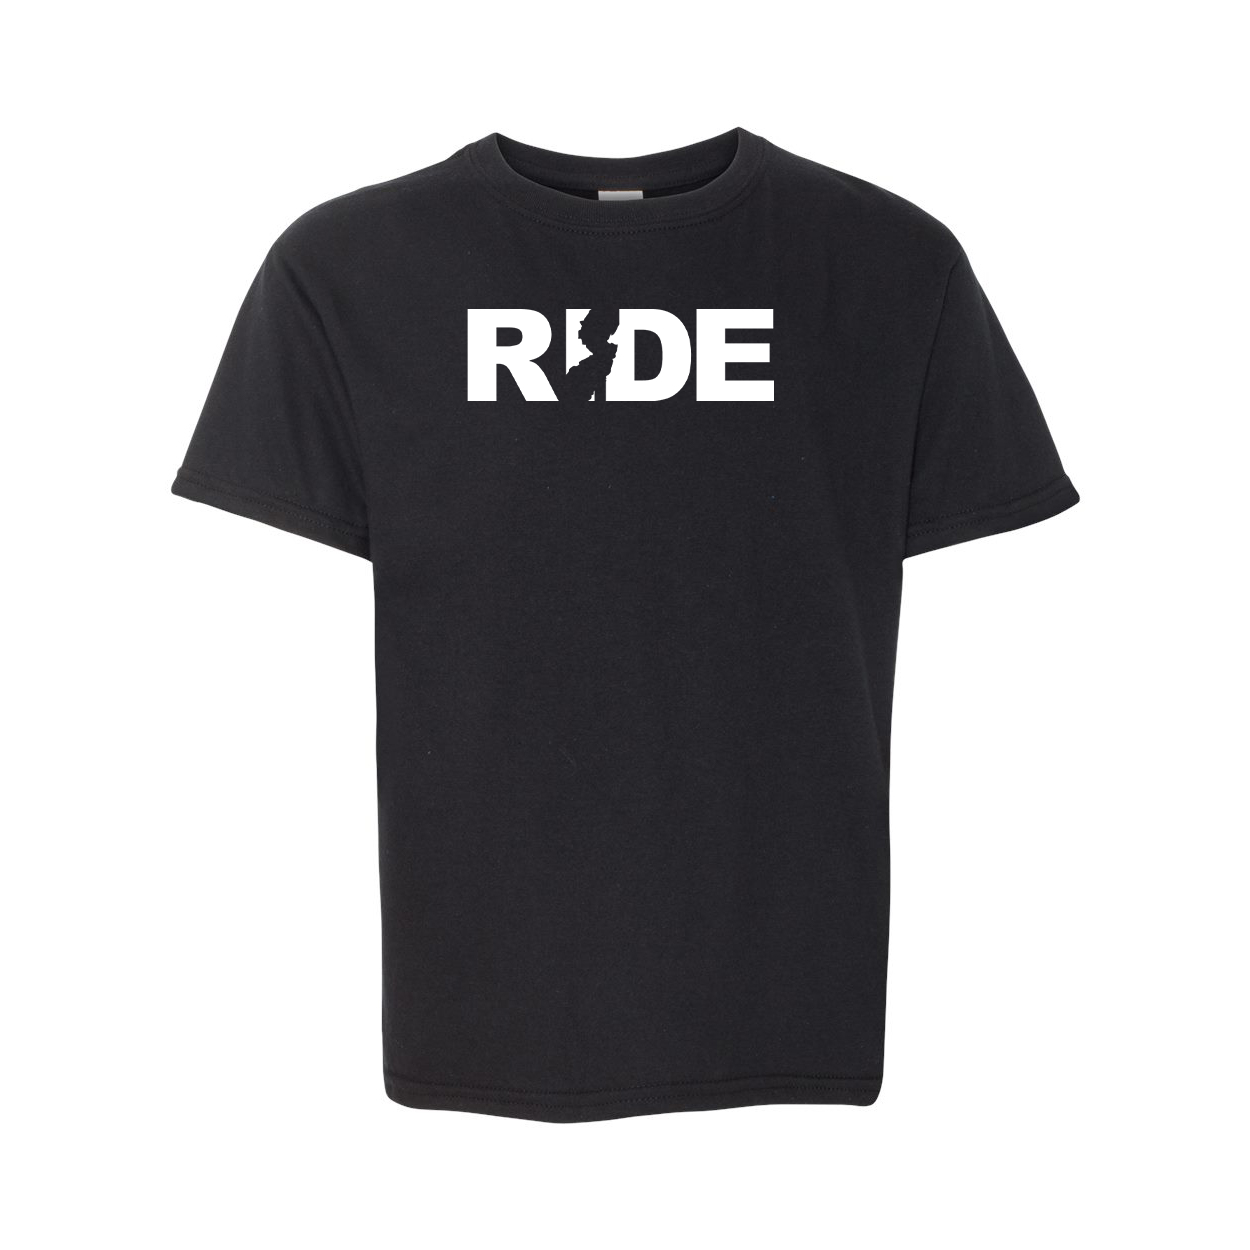 Ride New Jersey Classic Youth T-Shirt Black (White Logo)